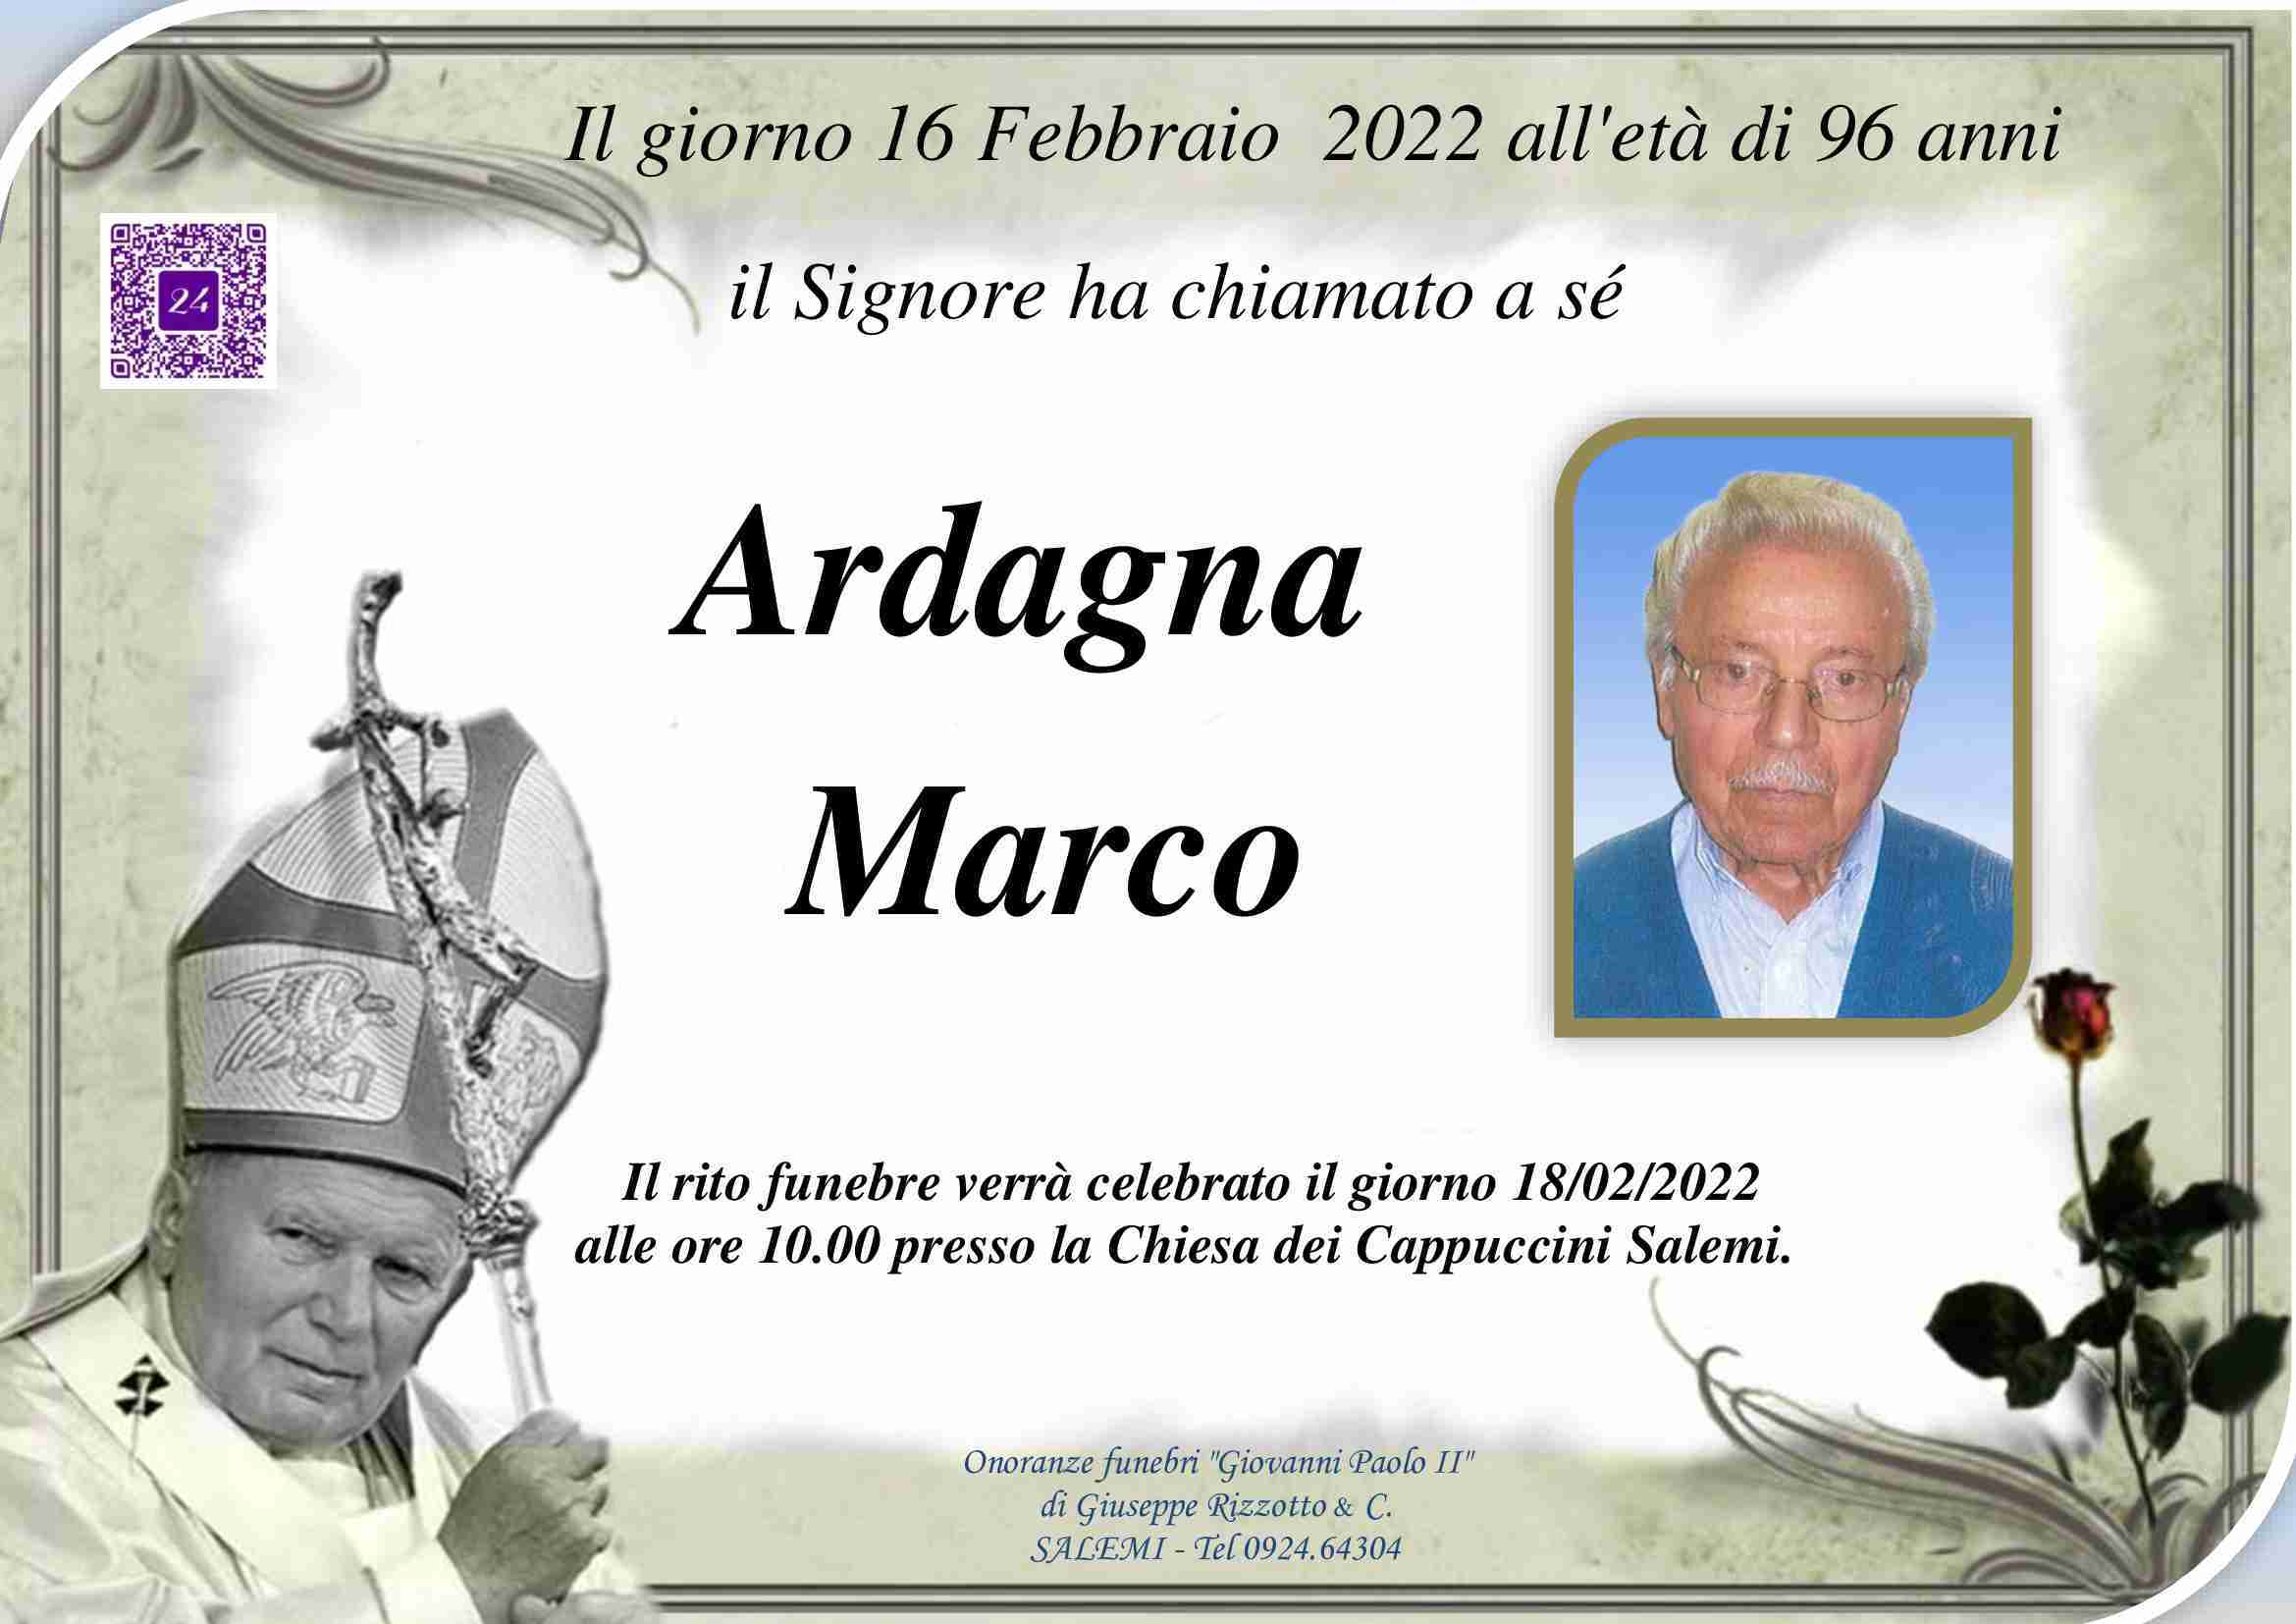 Marco Ardagna